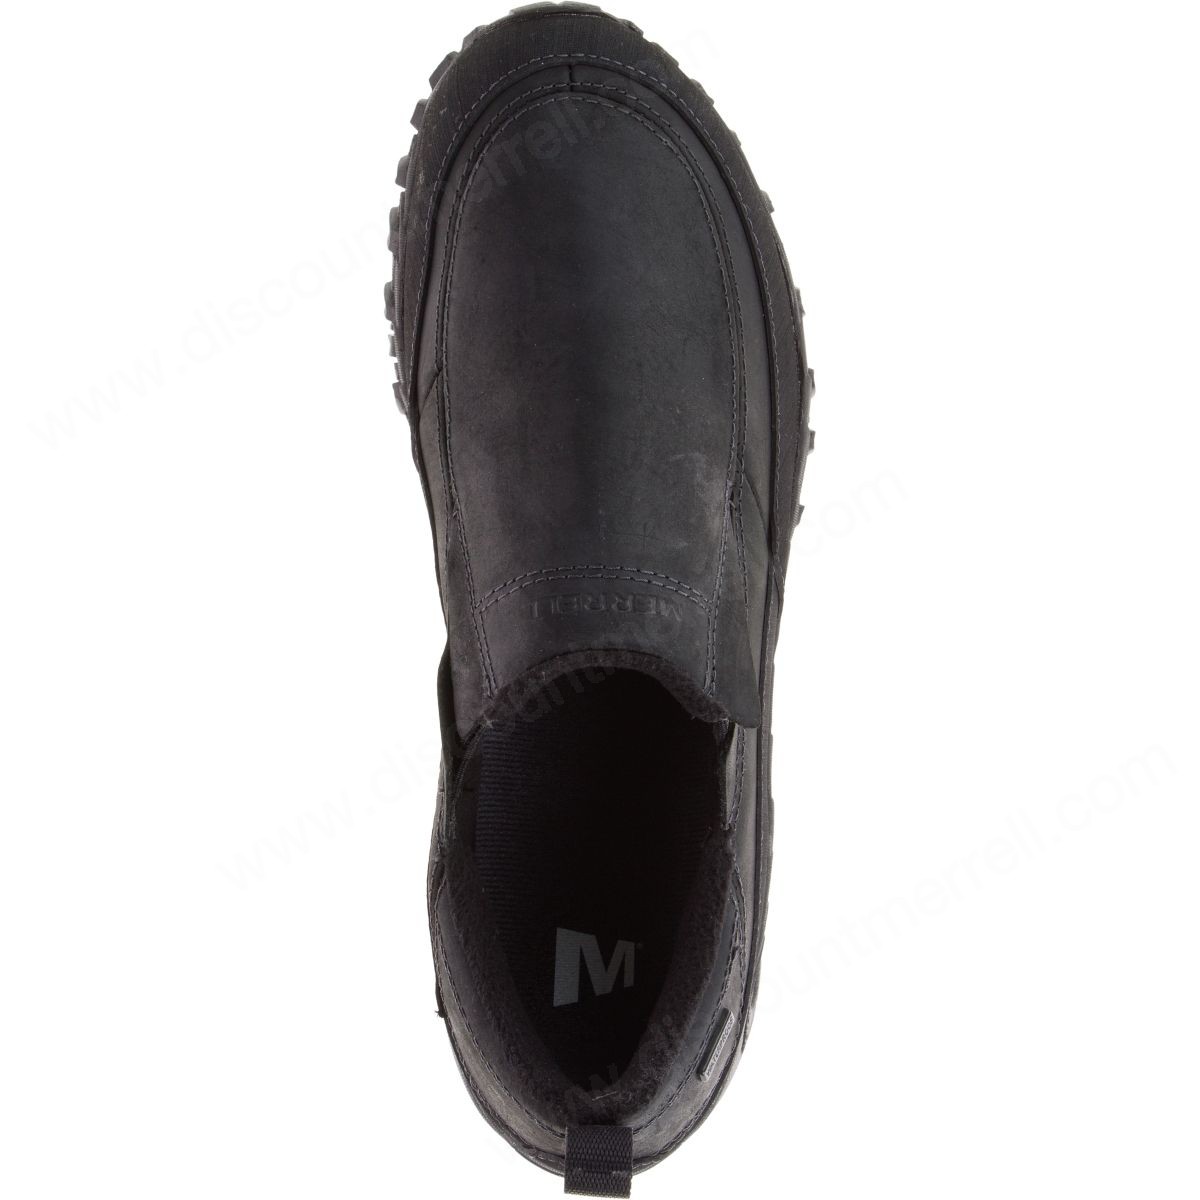 Merrell Men's Shiver Moc Waterproof Black - -2